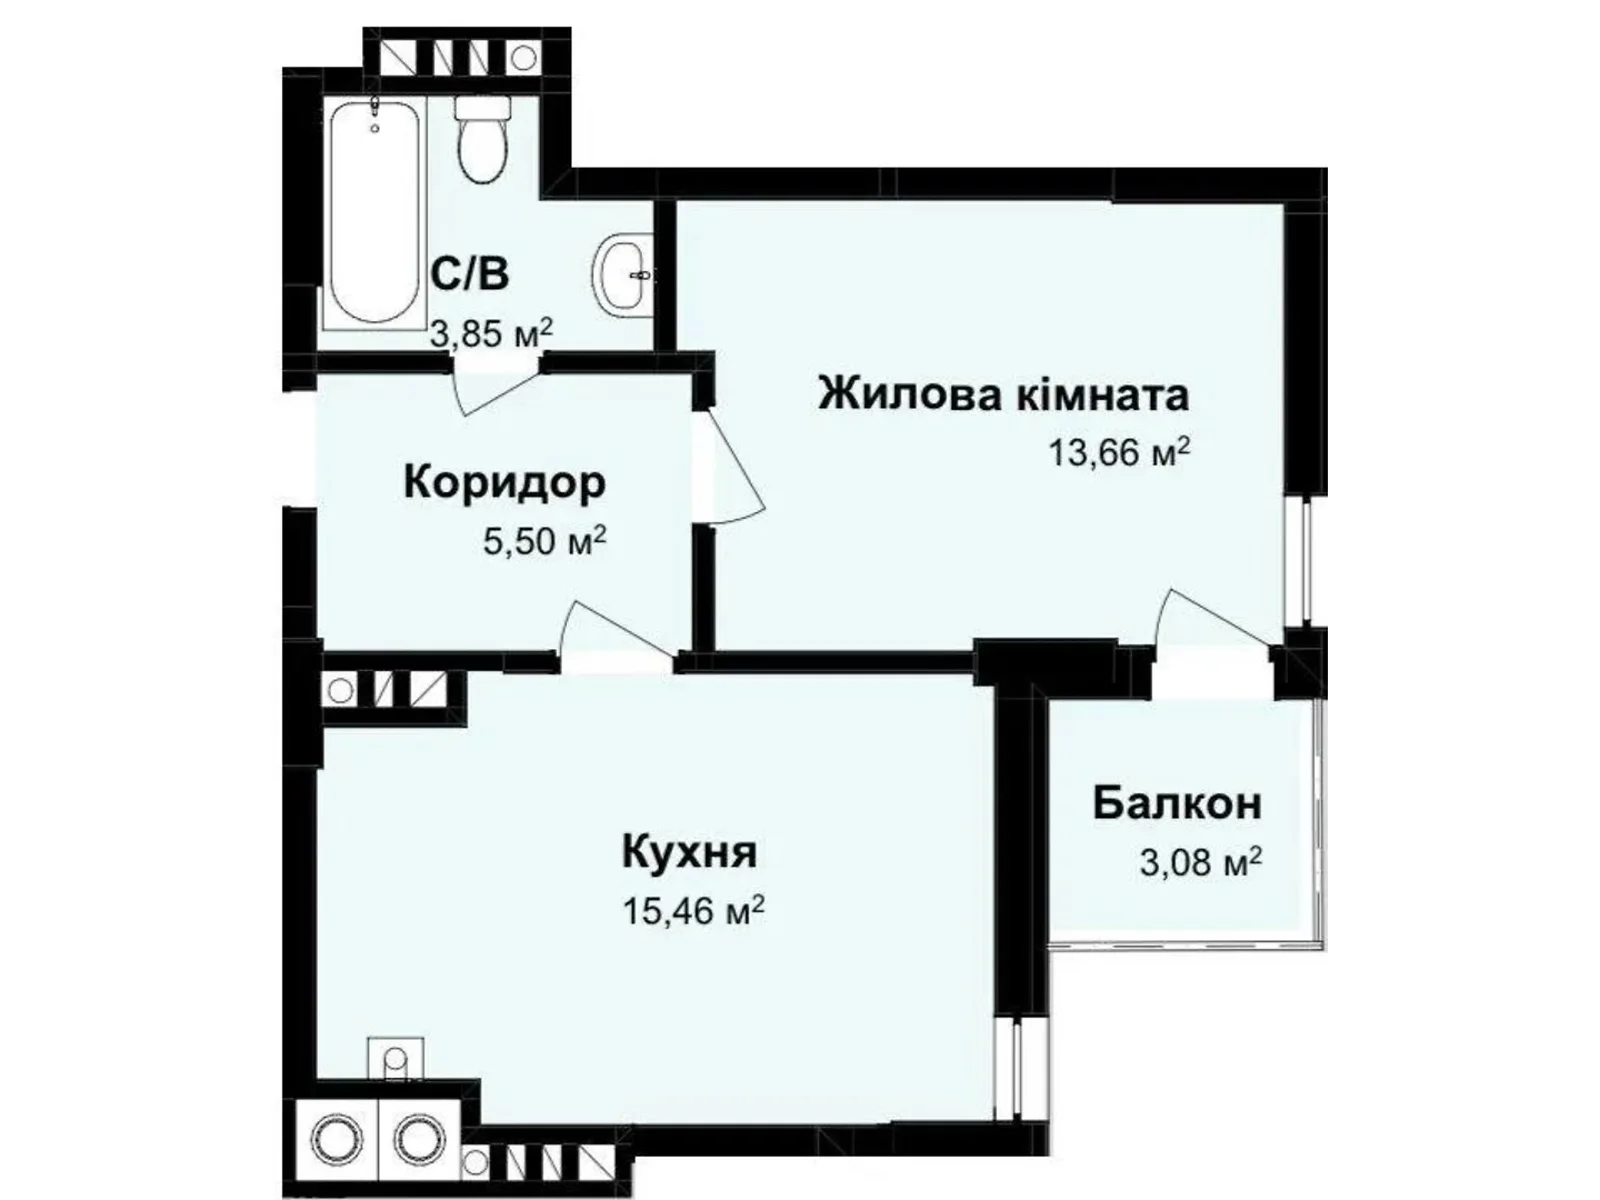 Продается 1-комнатная квартира 41.55 кв. м в Львове, цена: 49860 $ - фото 1